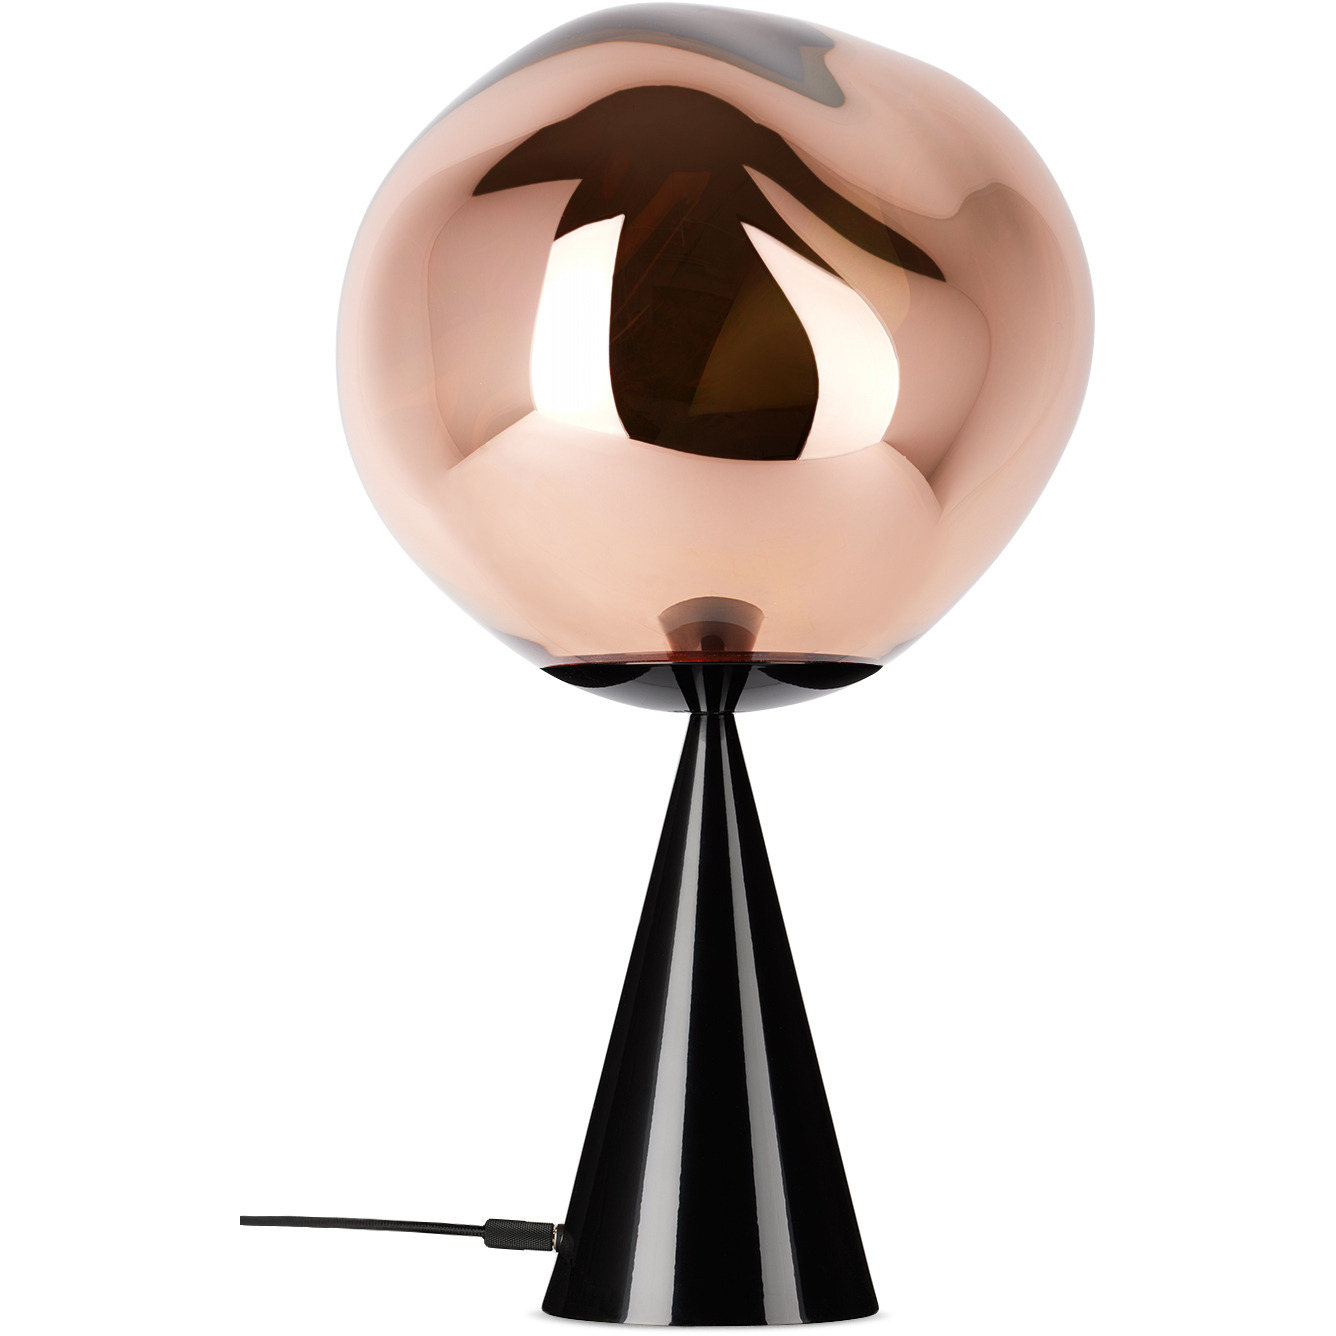 Tom Dixon Copper Melt Cone Fat Table Lamp - image 1